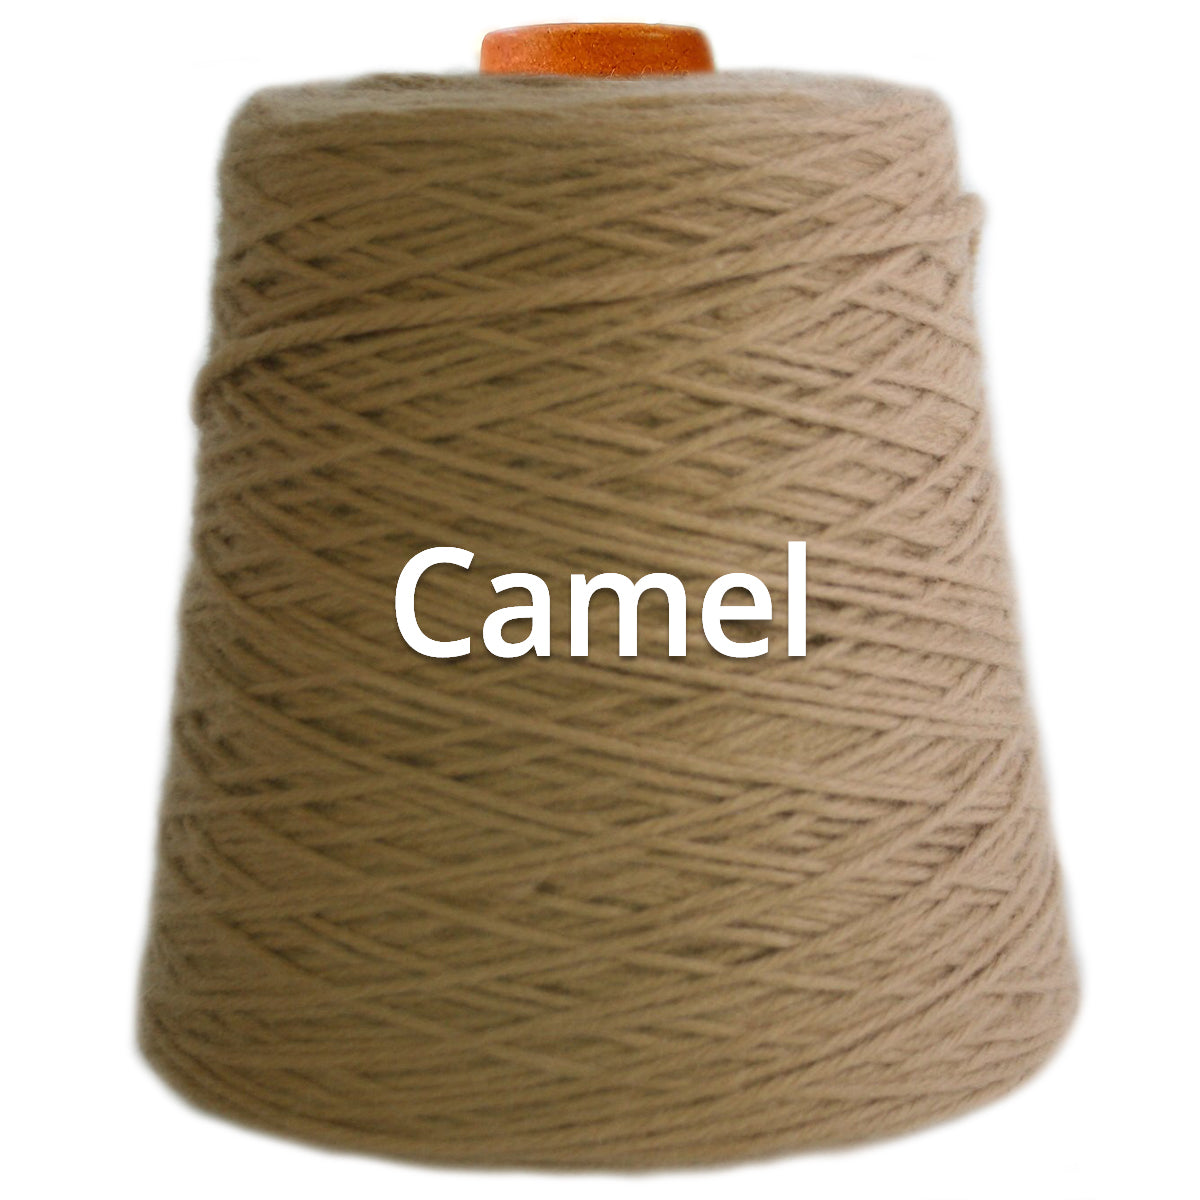 Camel - Nundle Collection 8 ply Chaffey Yarn 400g Cone